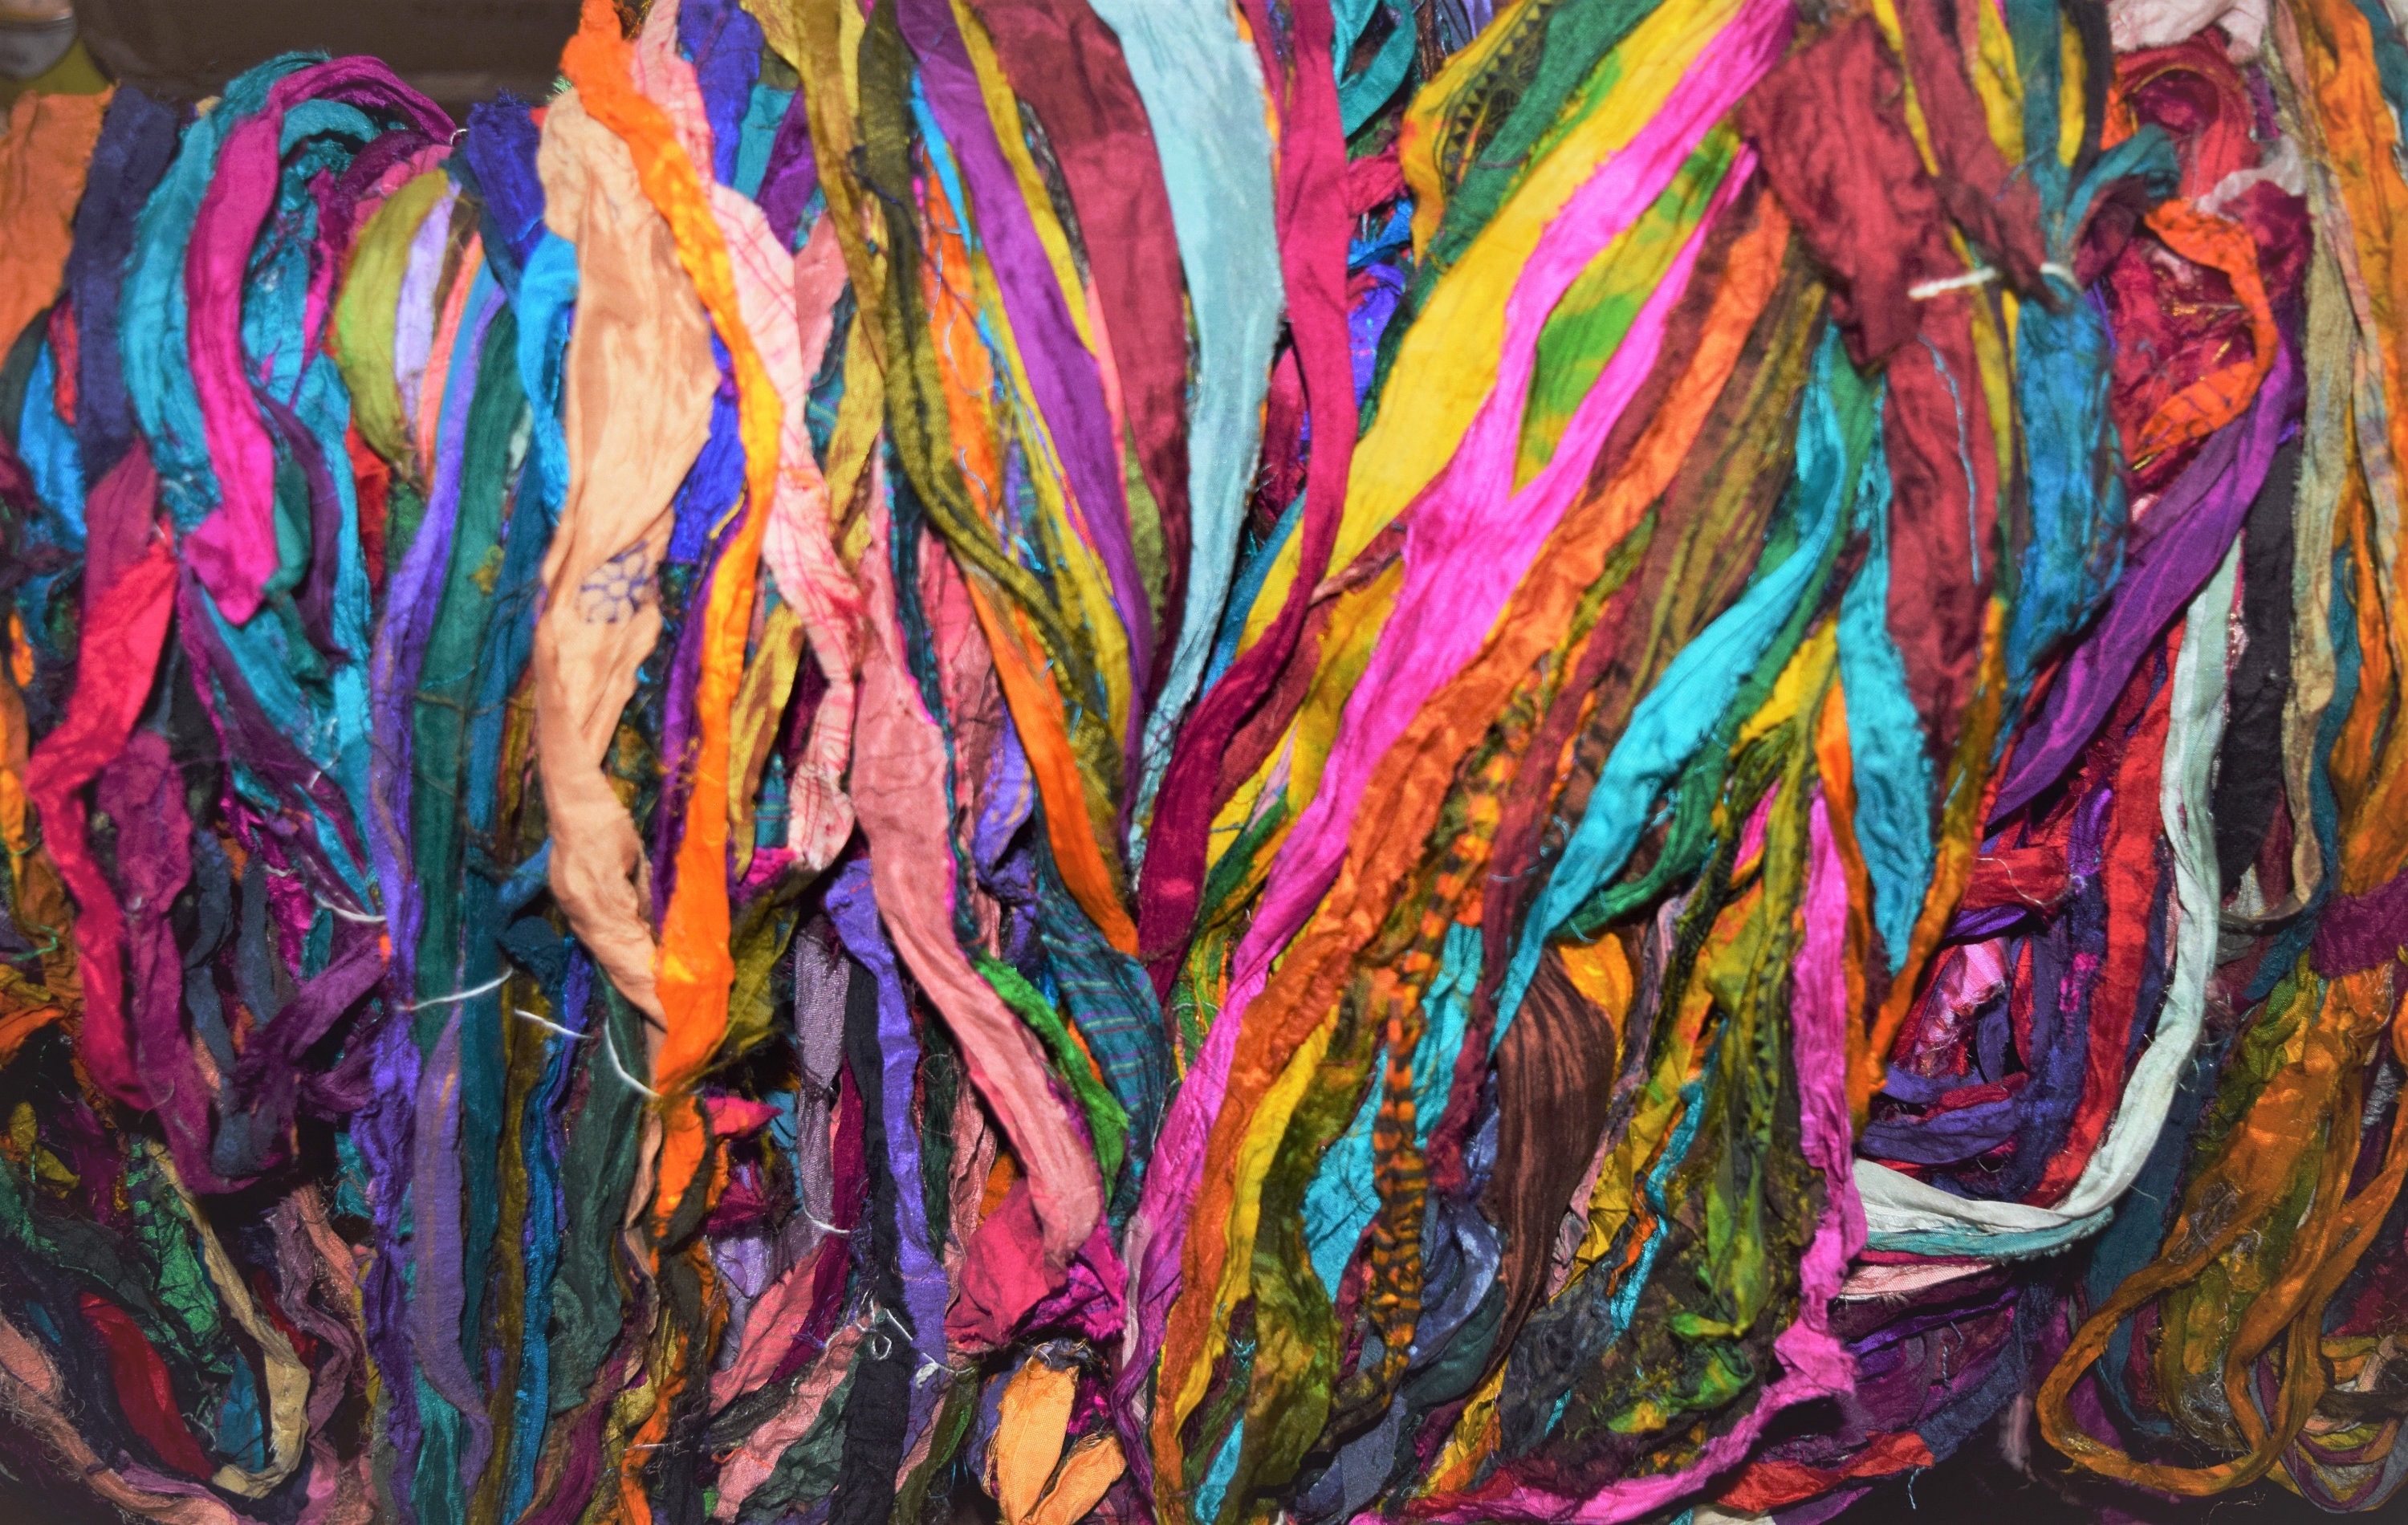 Recycled Sari Silk Ribbon Ball Pack / Choose Your Own Colours / Raw Silk /  Raw Edge Ribbon / Recycled Silk / Weaving Art Yarn / Bouquet 